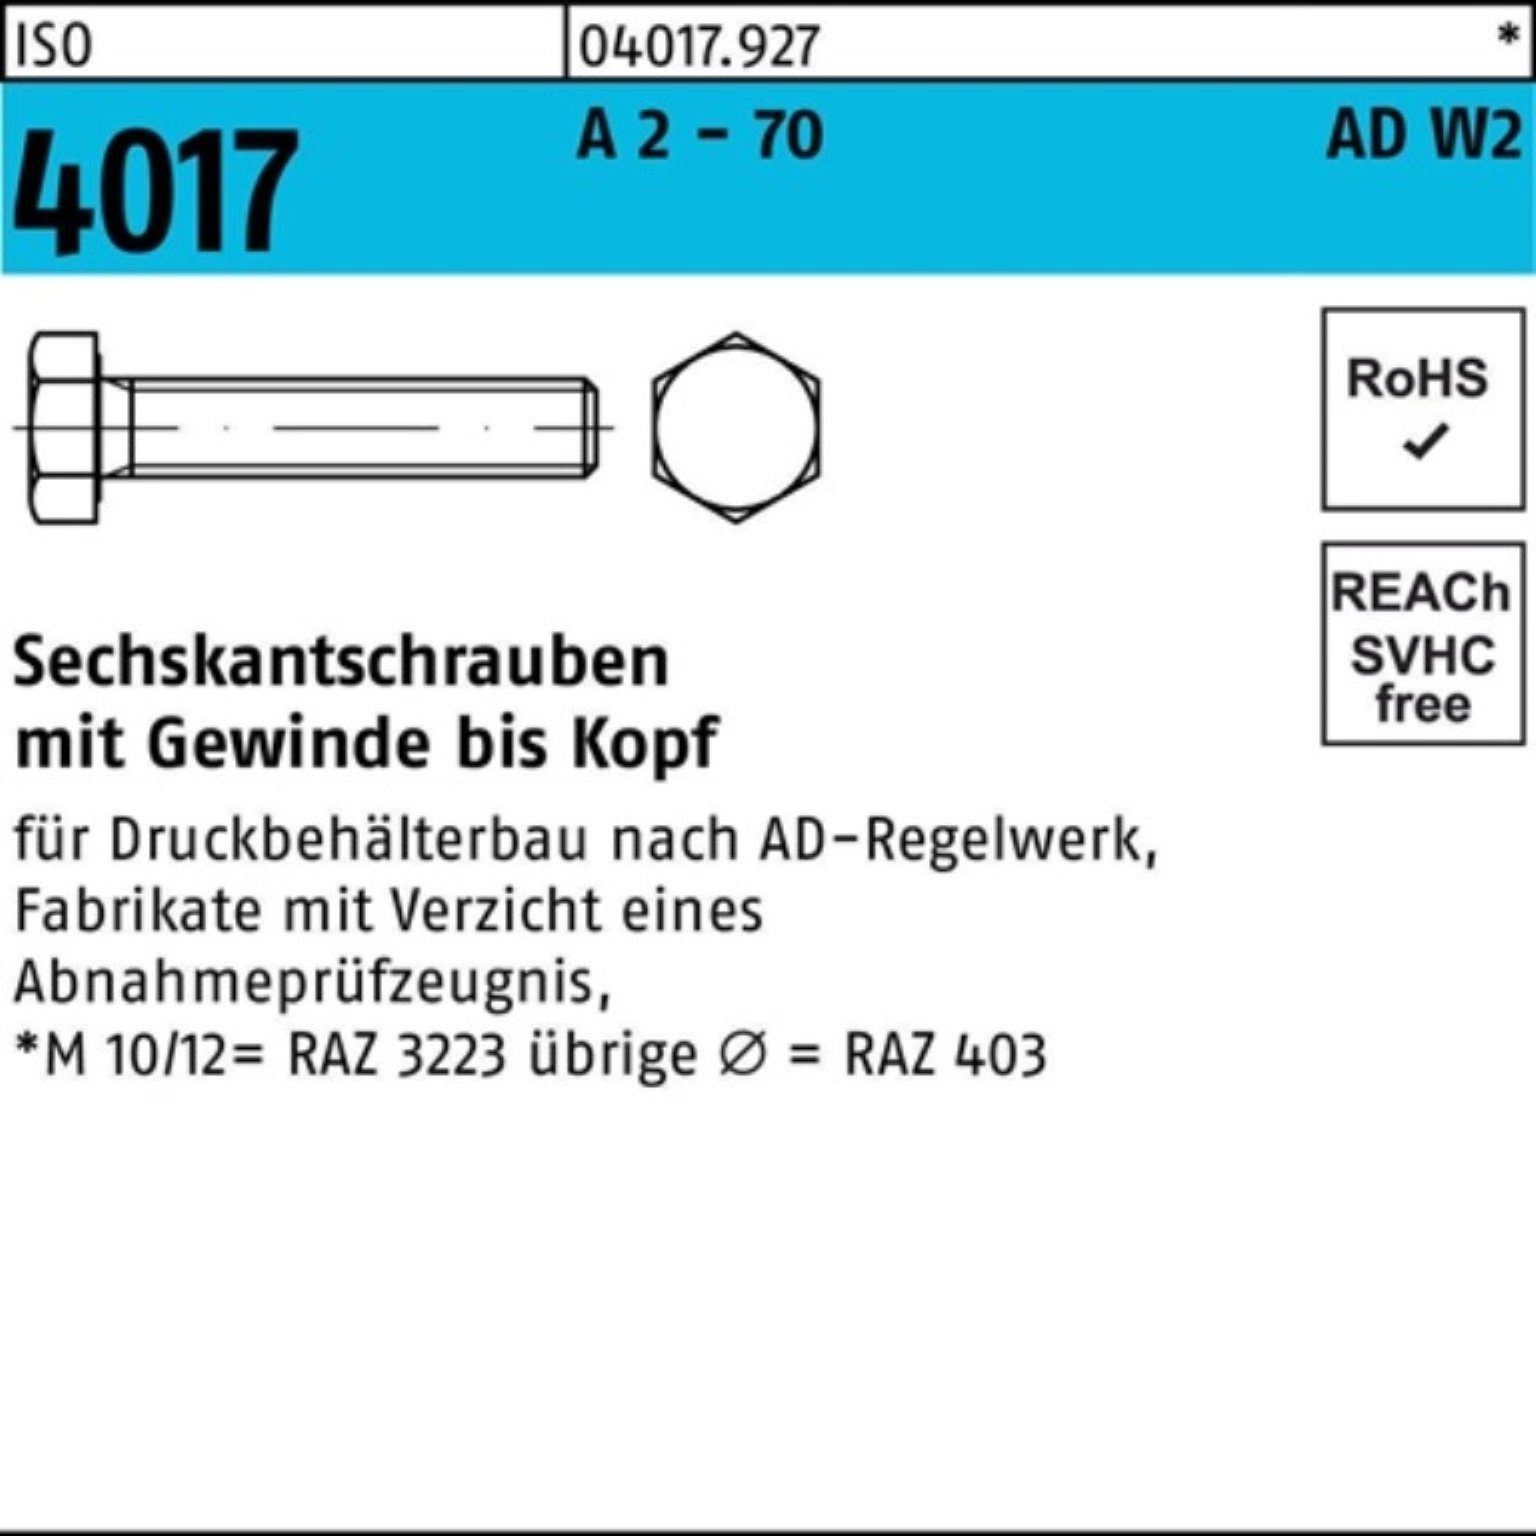 Bufab Sechskantschraube 100er Pack Sechskantschraube - 70 M12x ISO A 75 25 AD-W2 VG St 4017 2